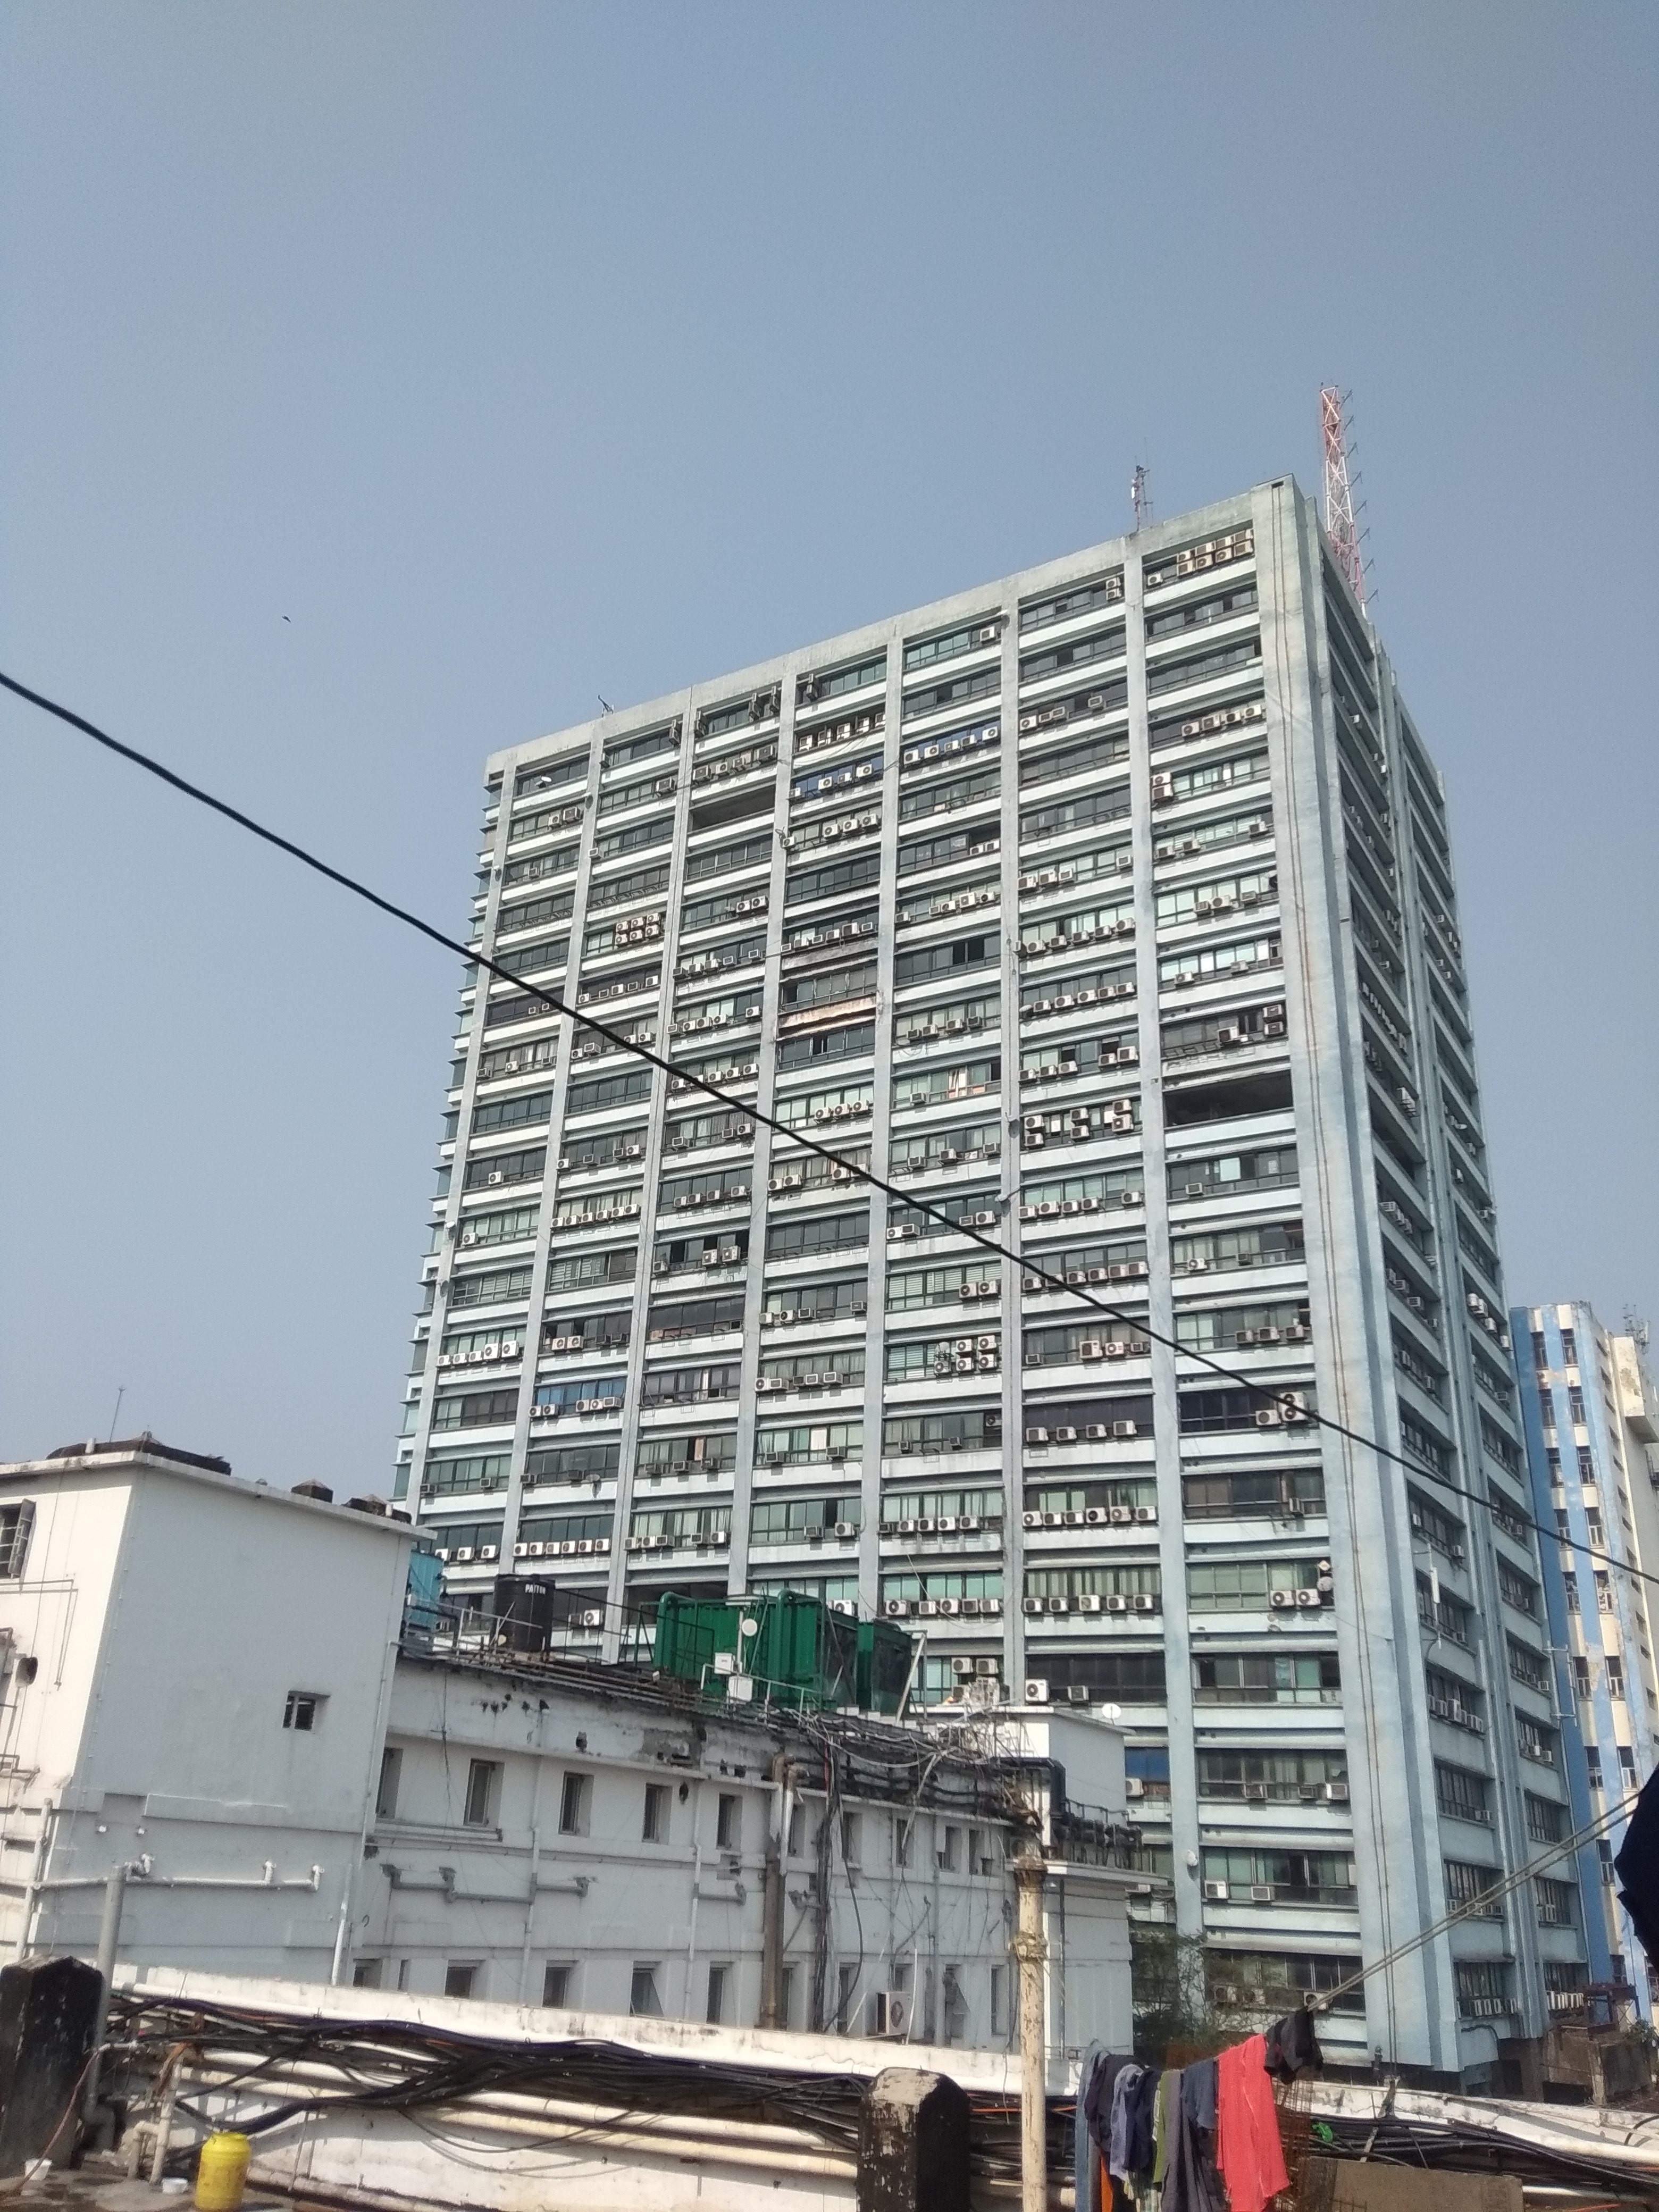 Commercial Office Space 1040 Sq.Ft. For Rent In Chowringhee Kolkata 1452190